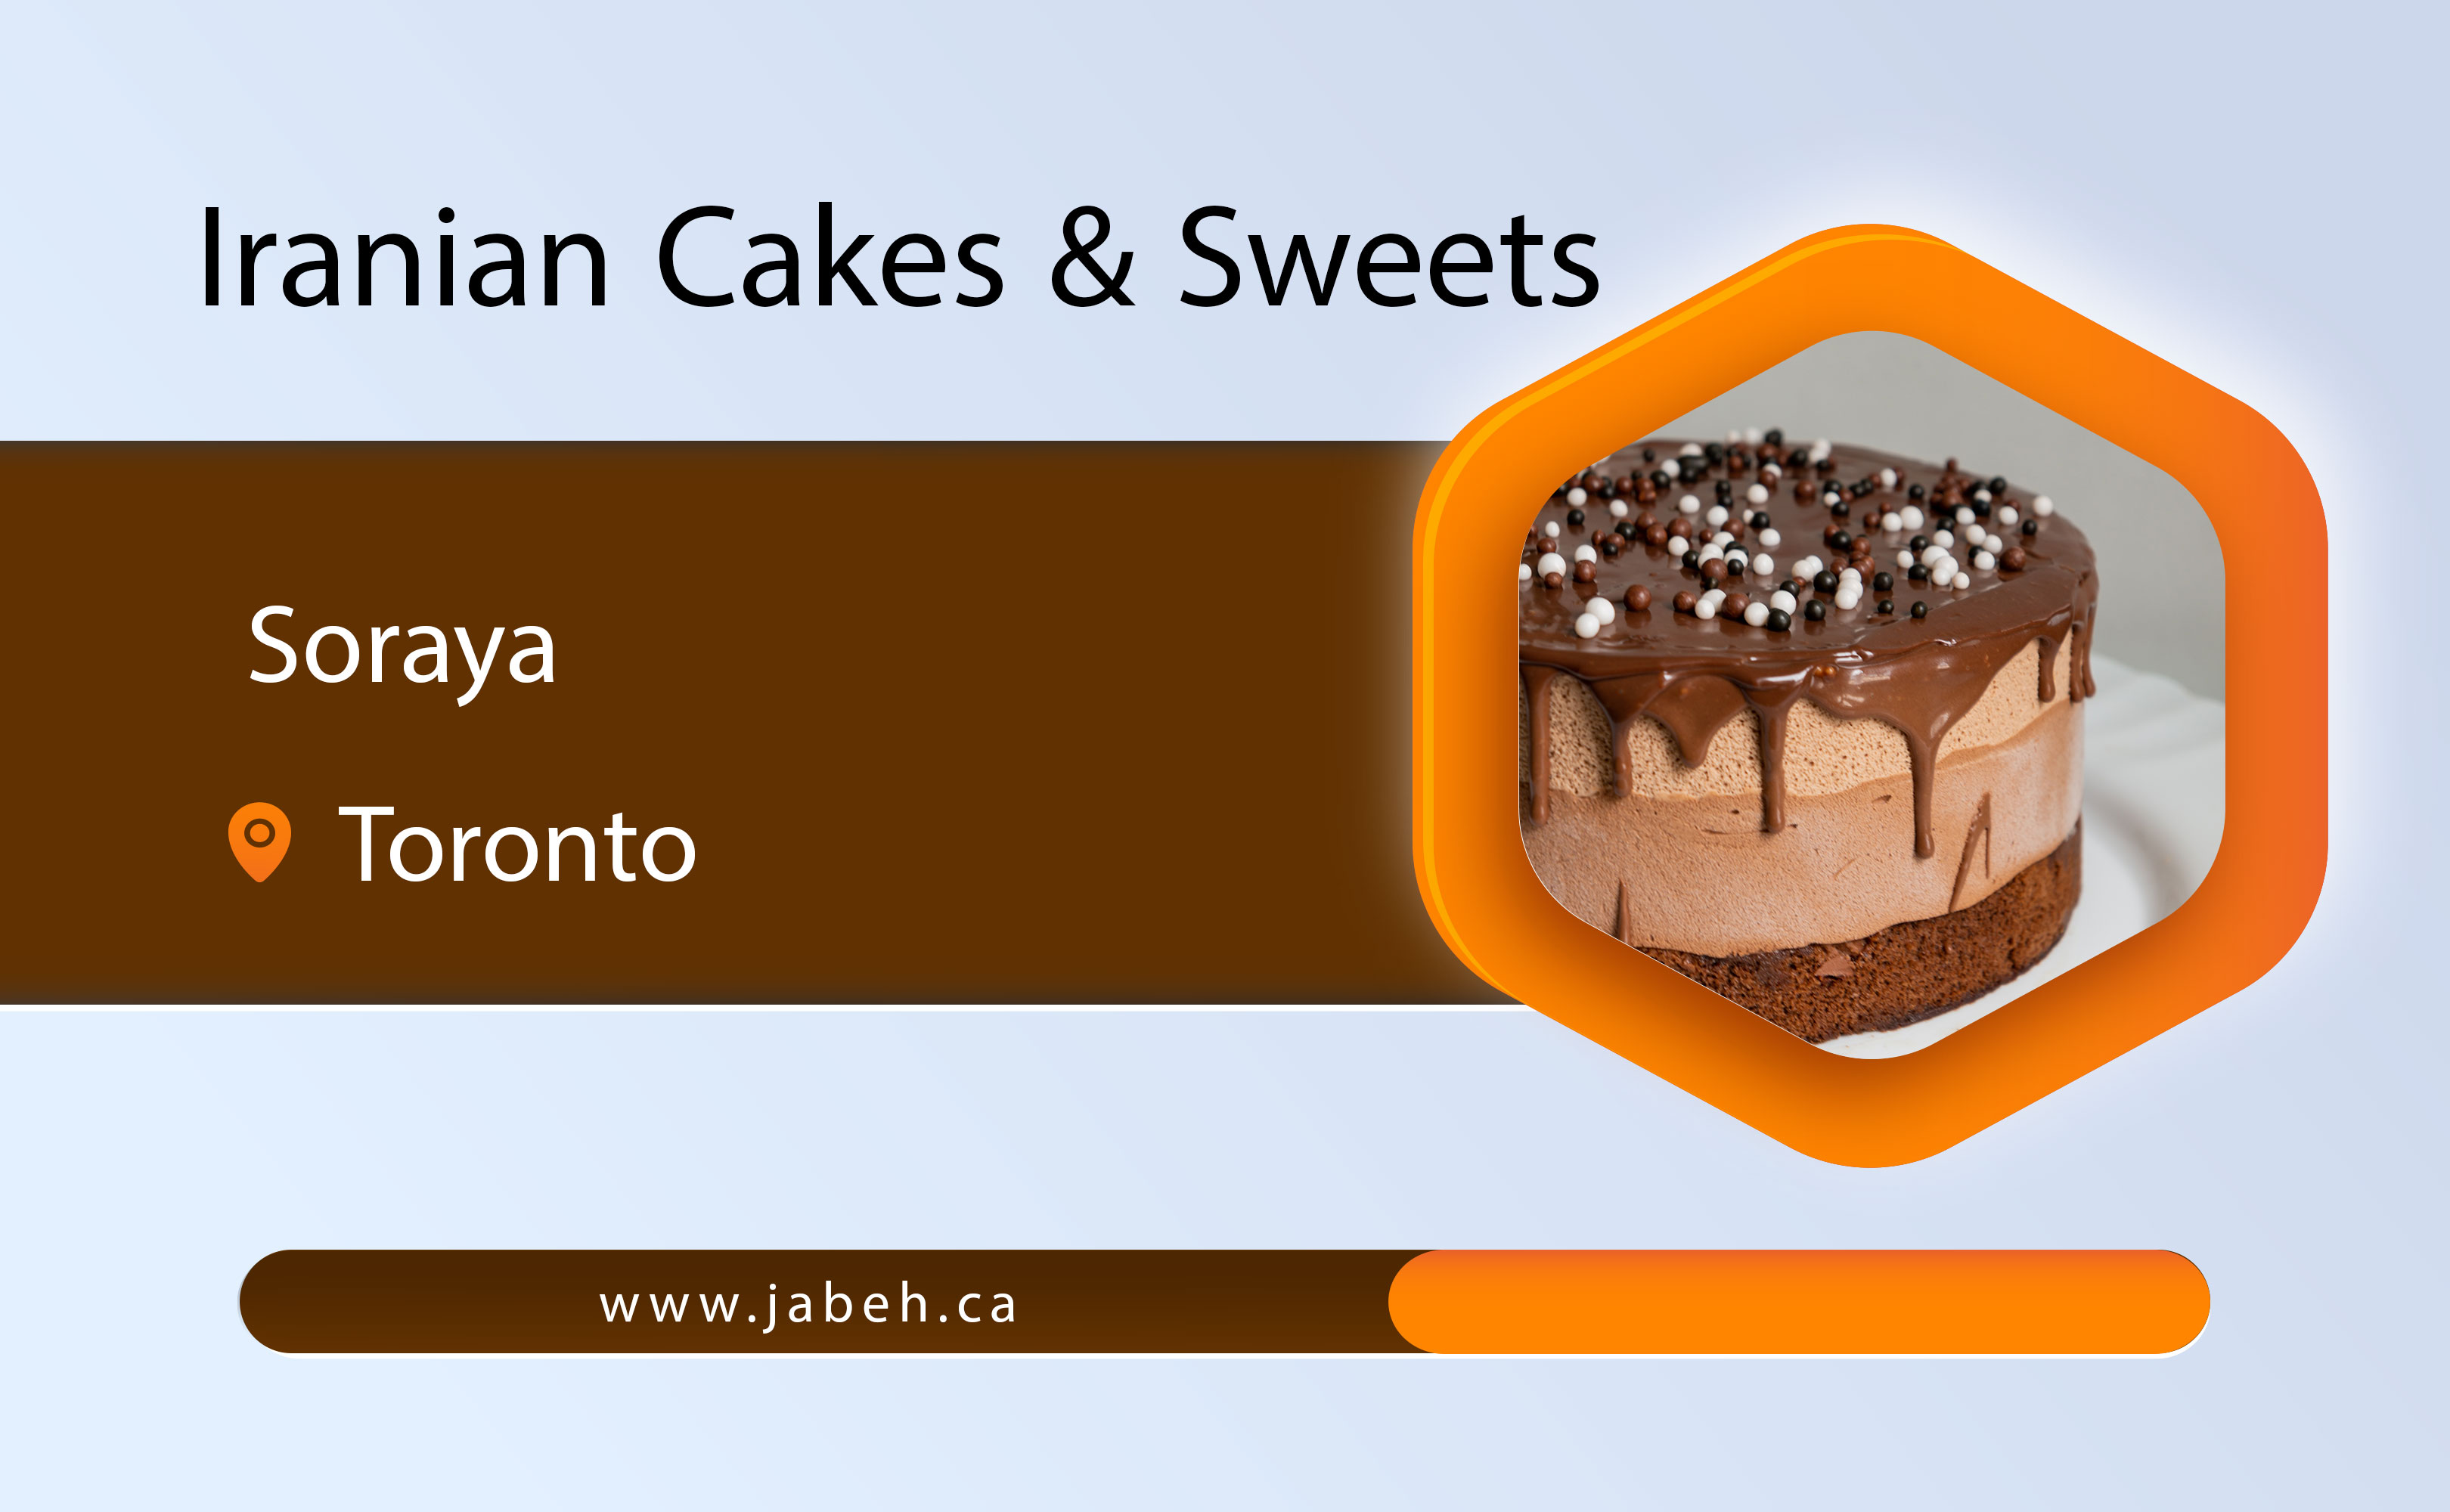 Soraya Iranian cakes and sweets in Toronto